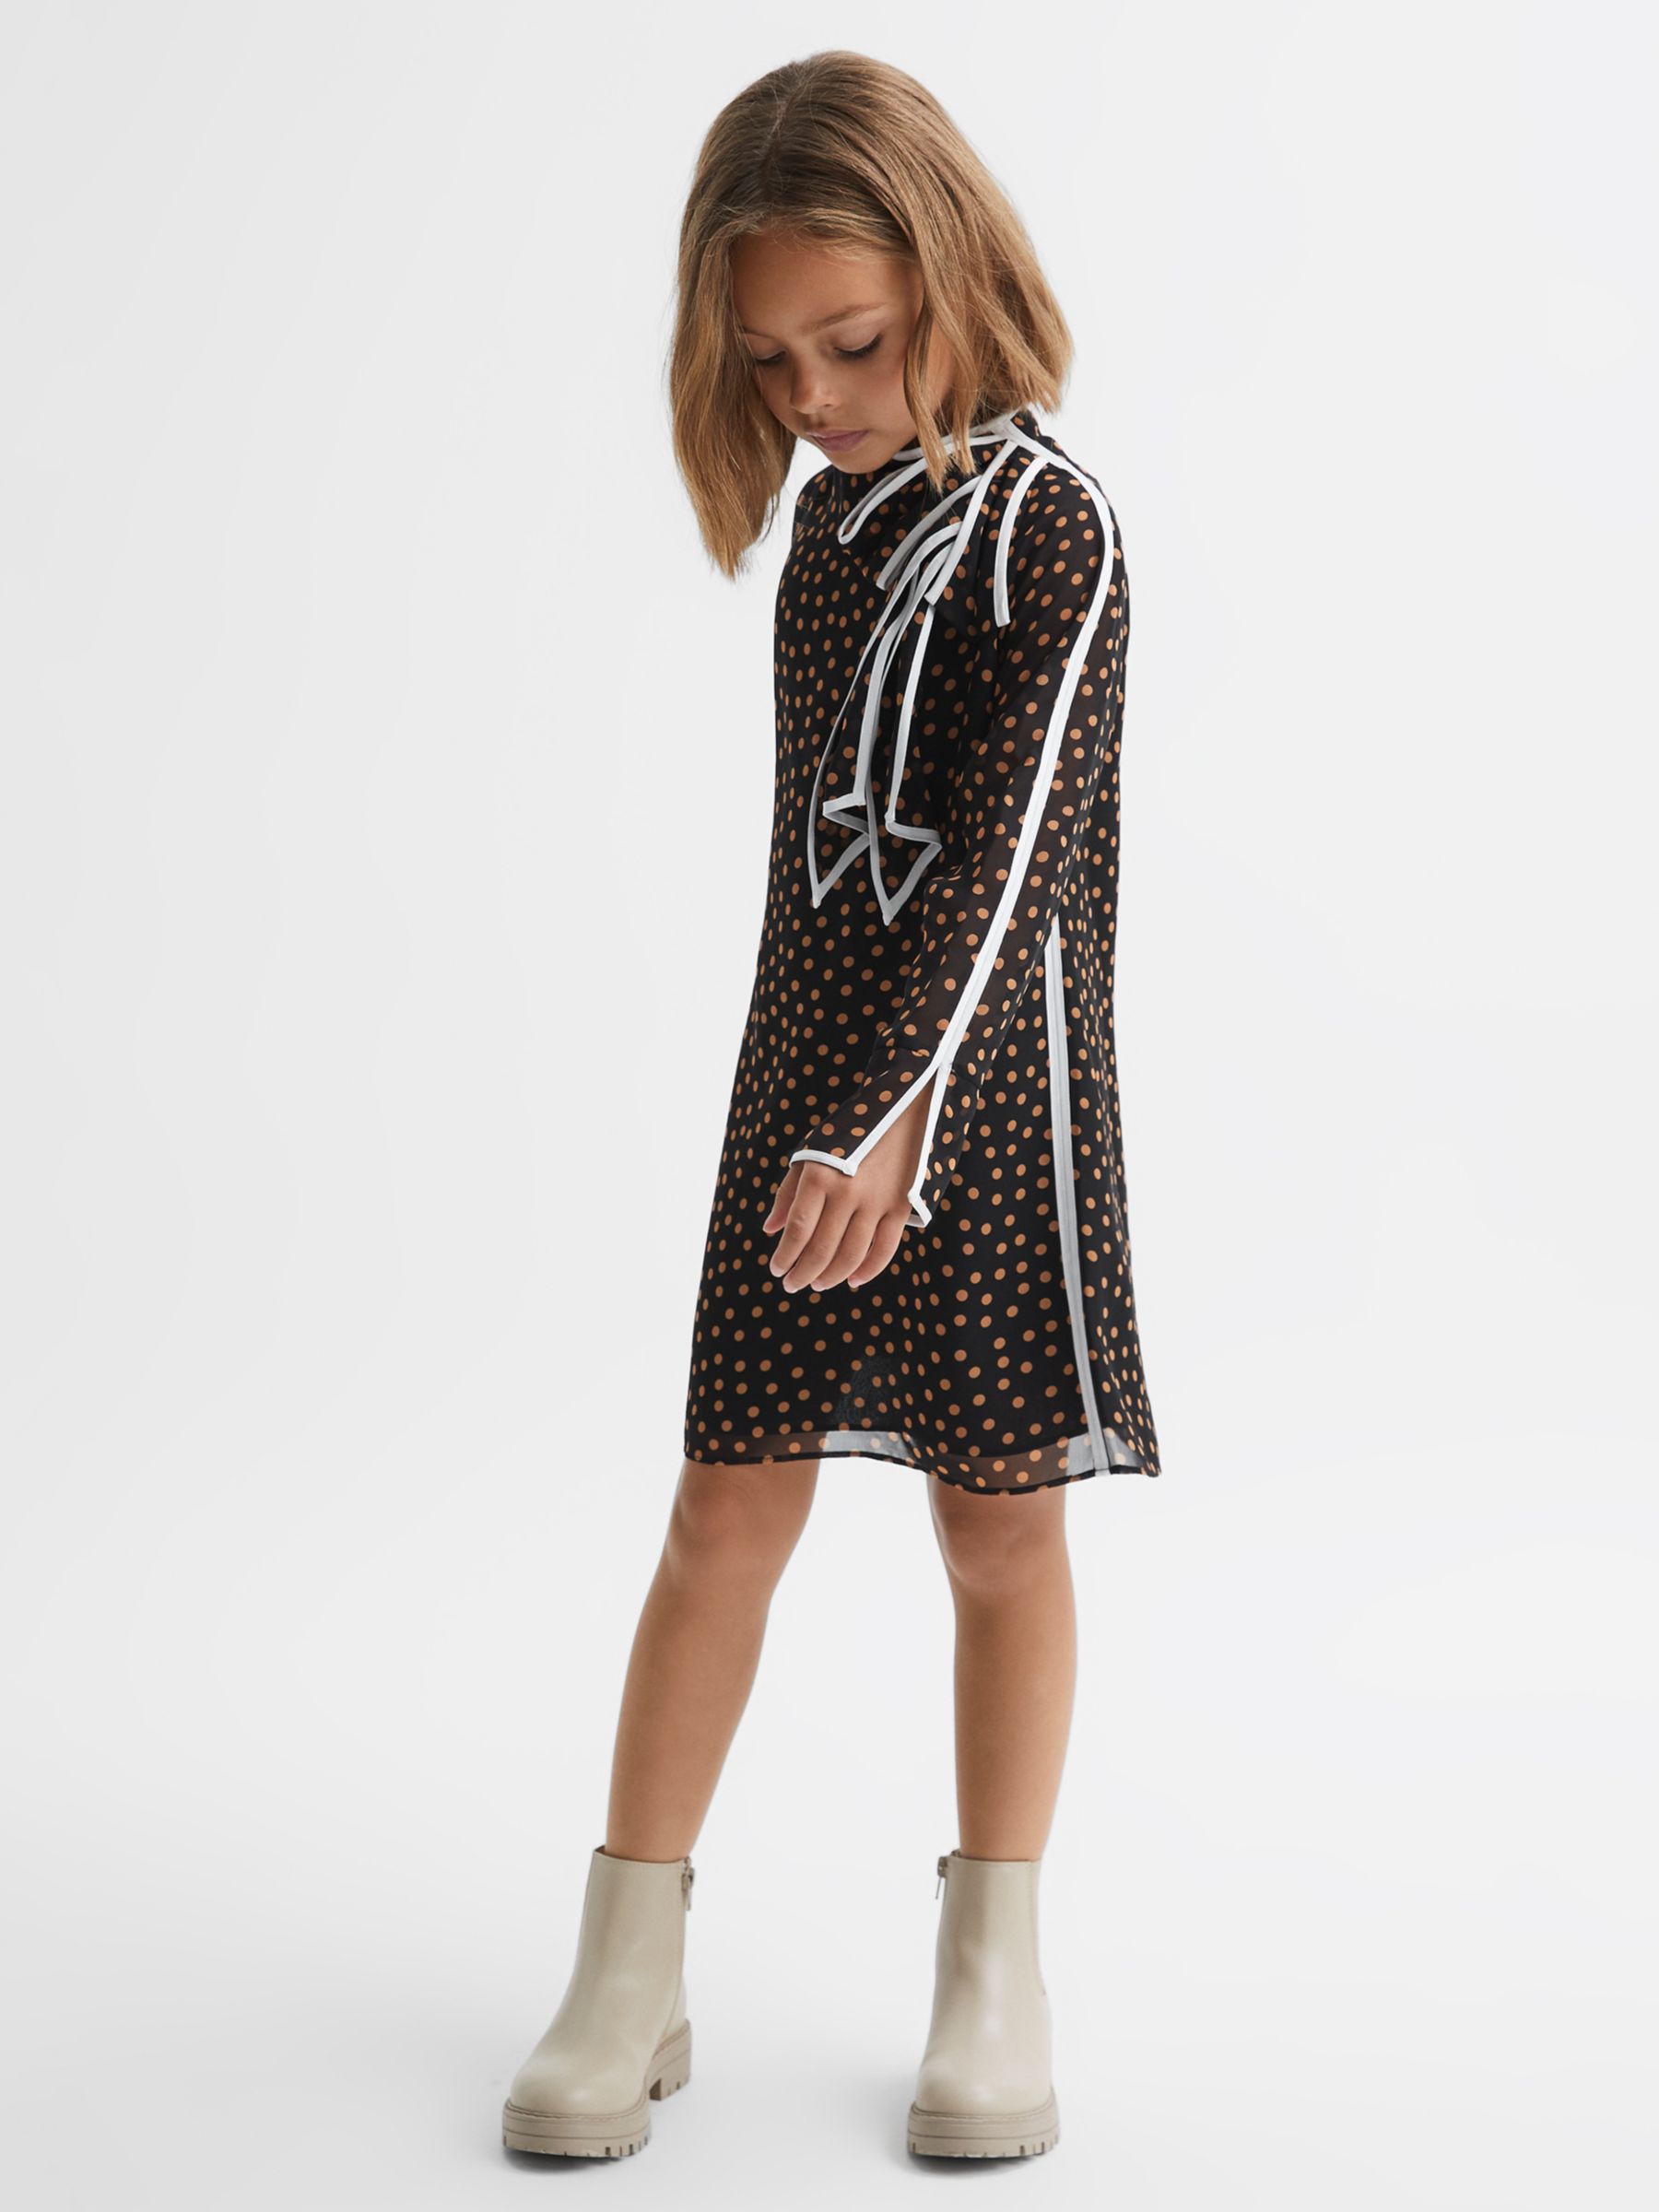 Buy Reiss Kids' Kate Spot Dress, Black/Multi Online at johnlewis.com